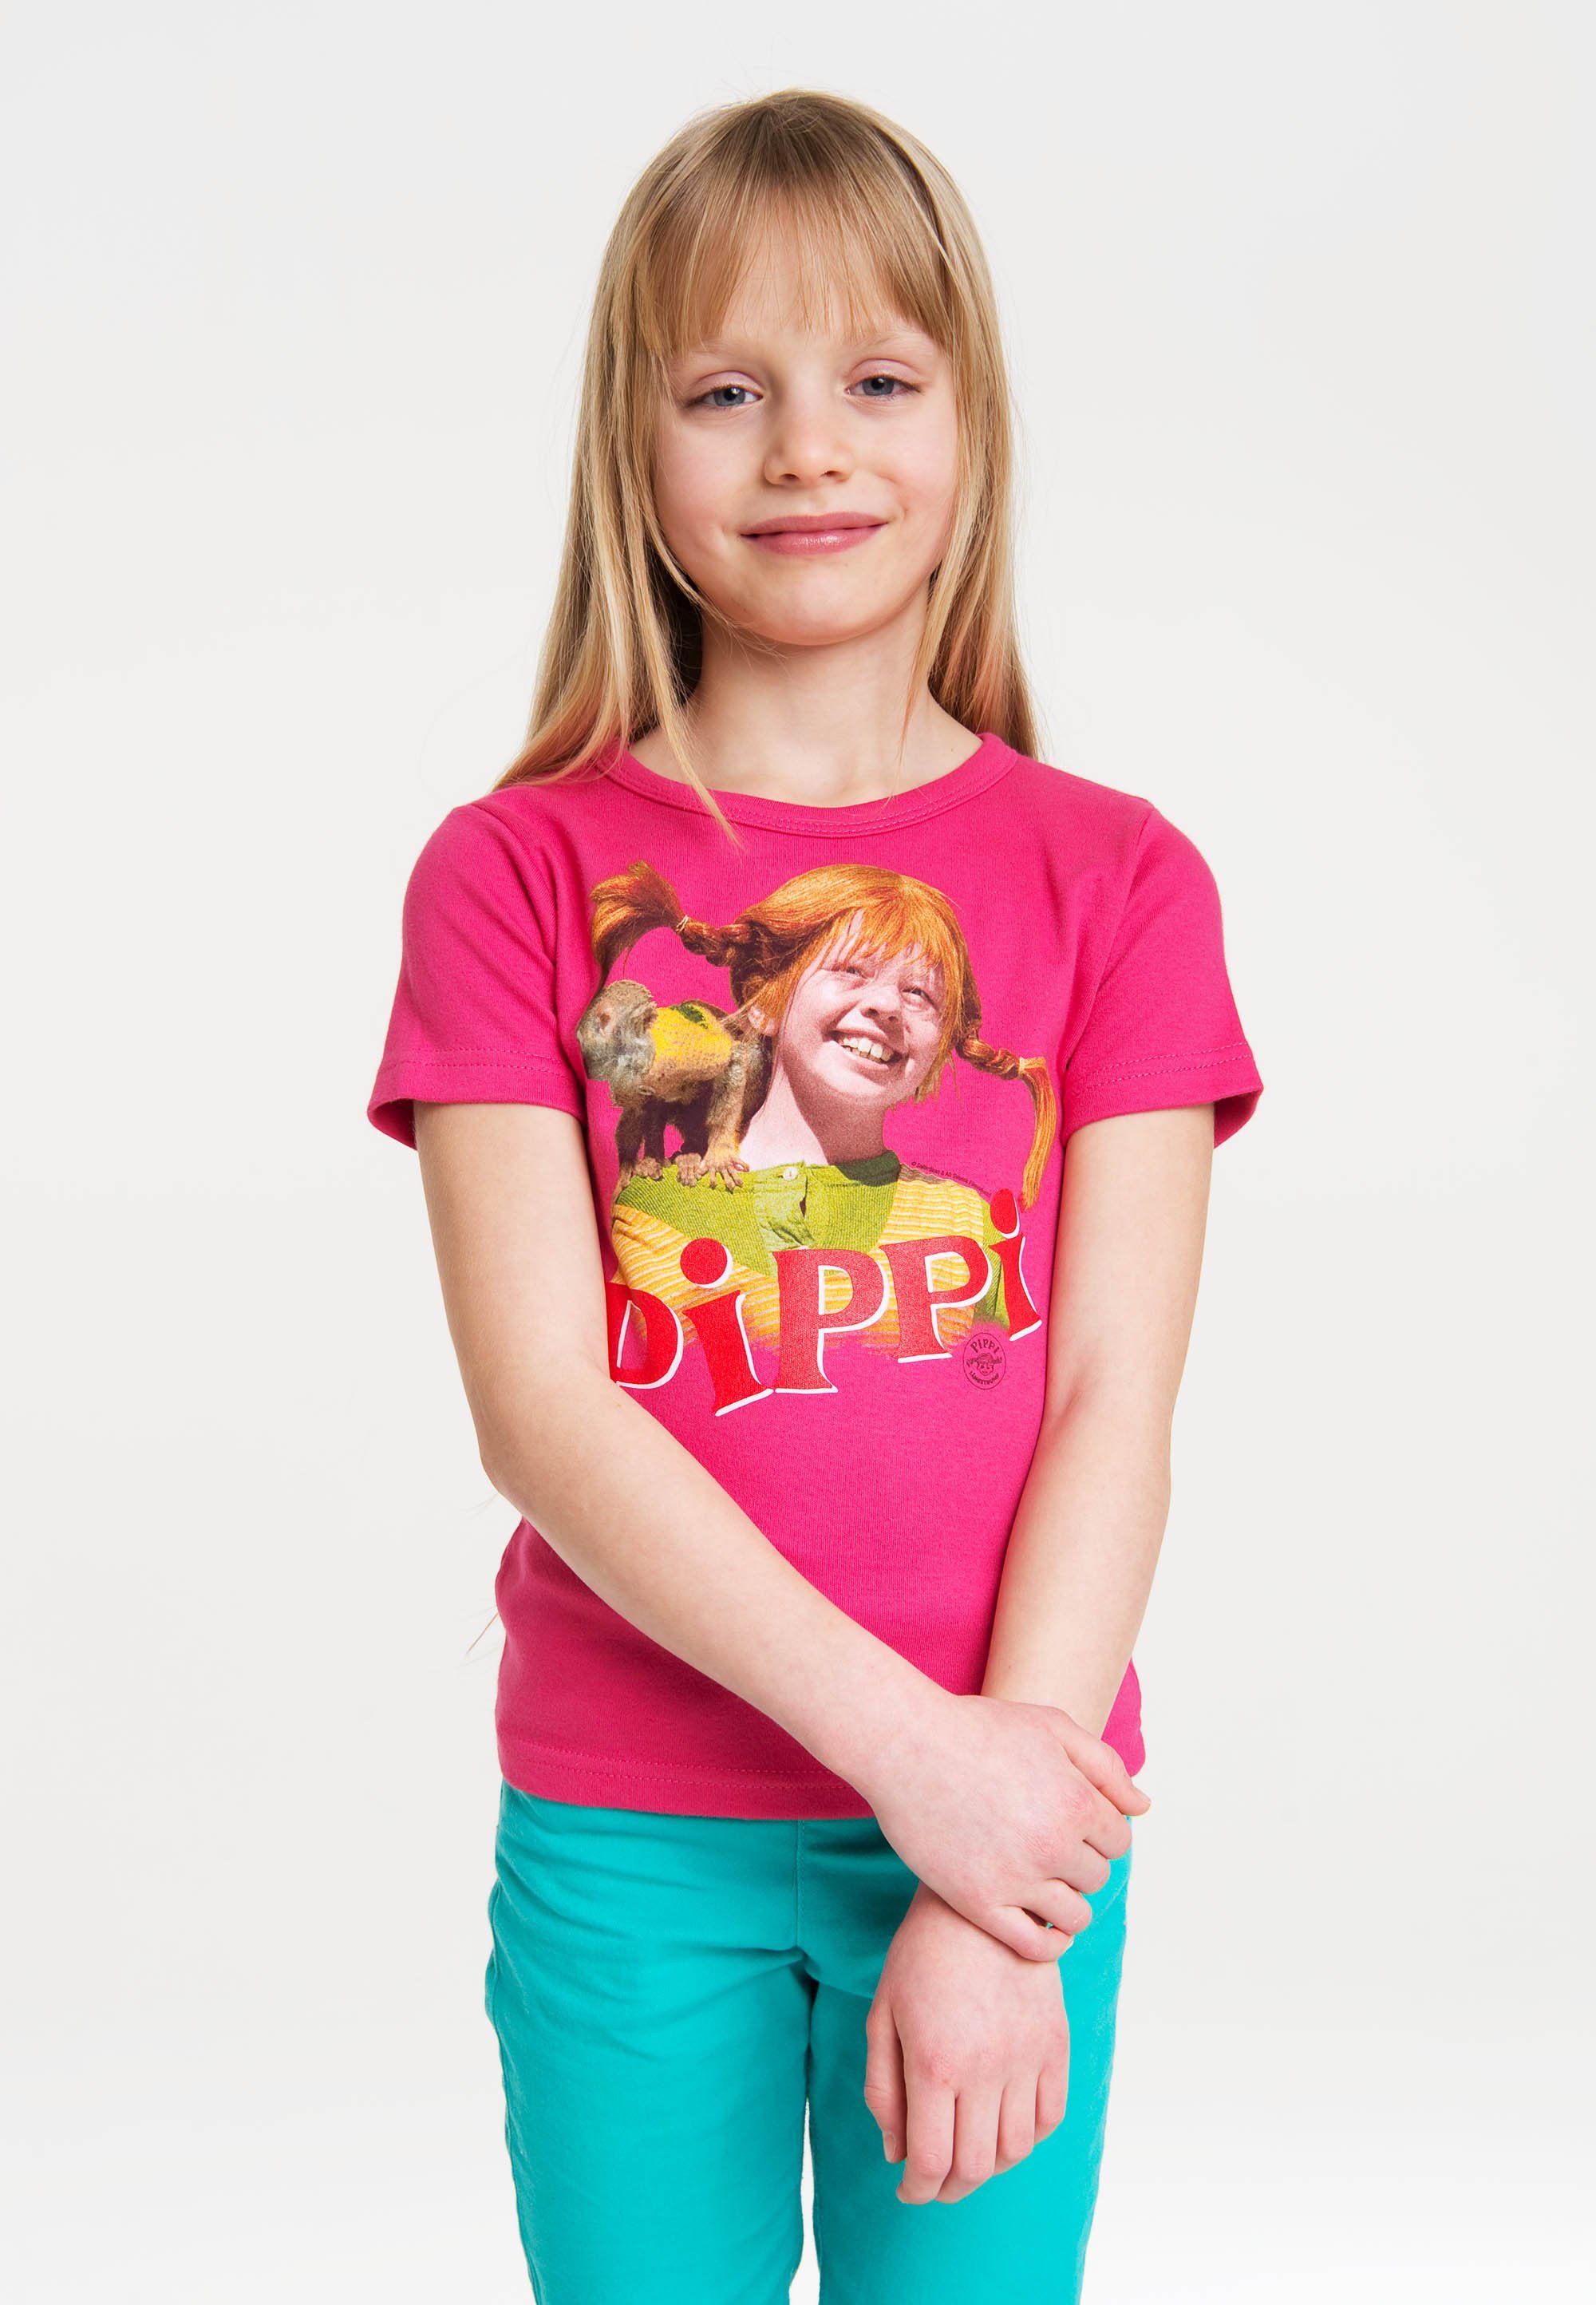 LOGOSHIRT T-Shirt Pippi Langstrumpf & Herr Nilsson mit Langstrumpf-Frontdruck rosa | T-Shirts